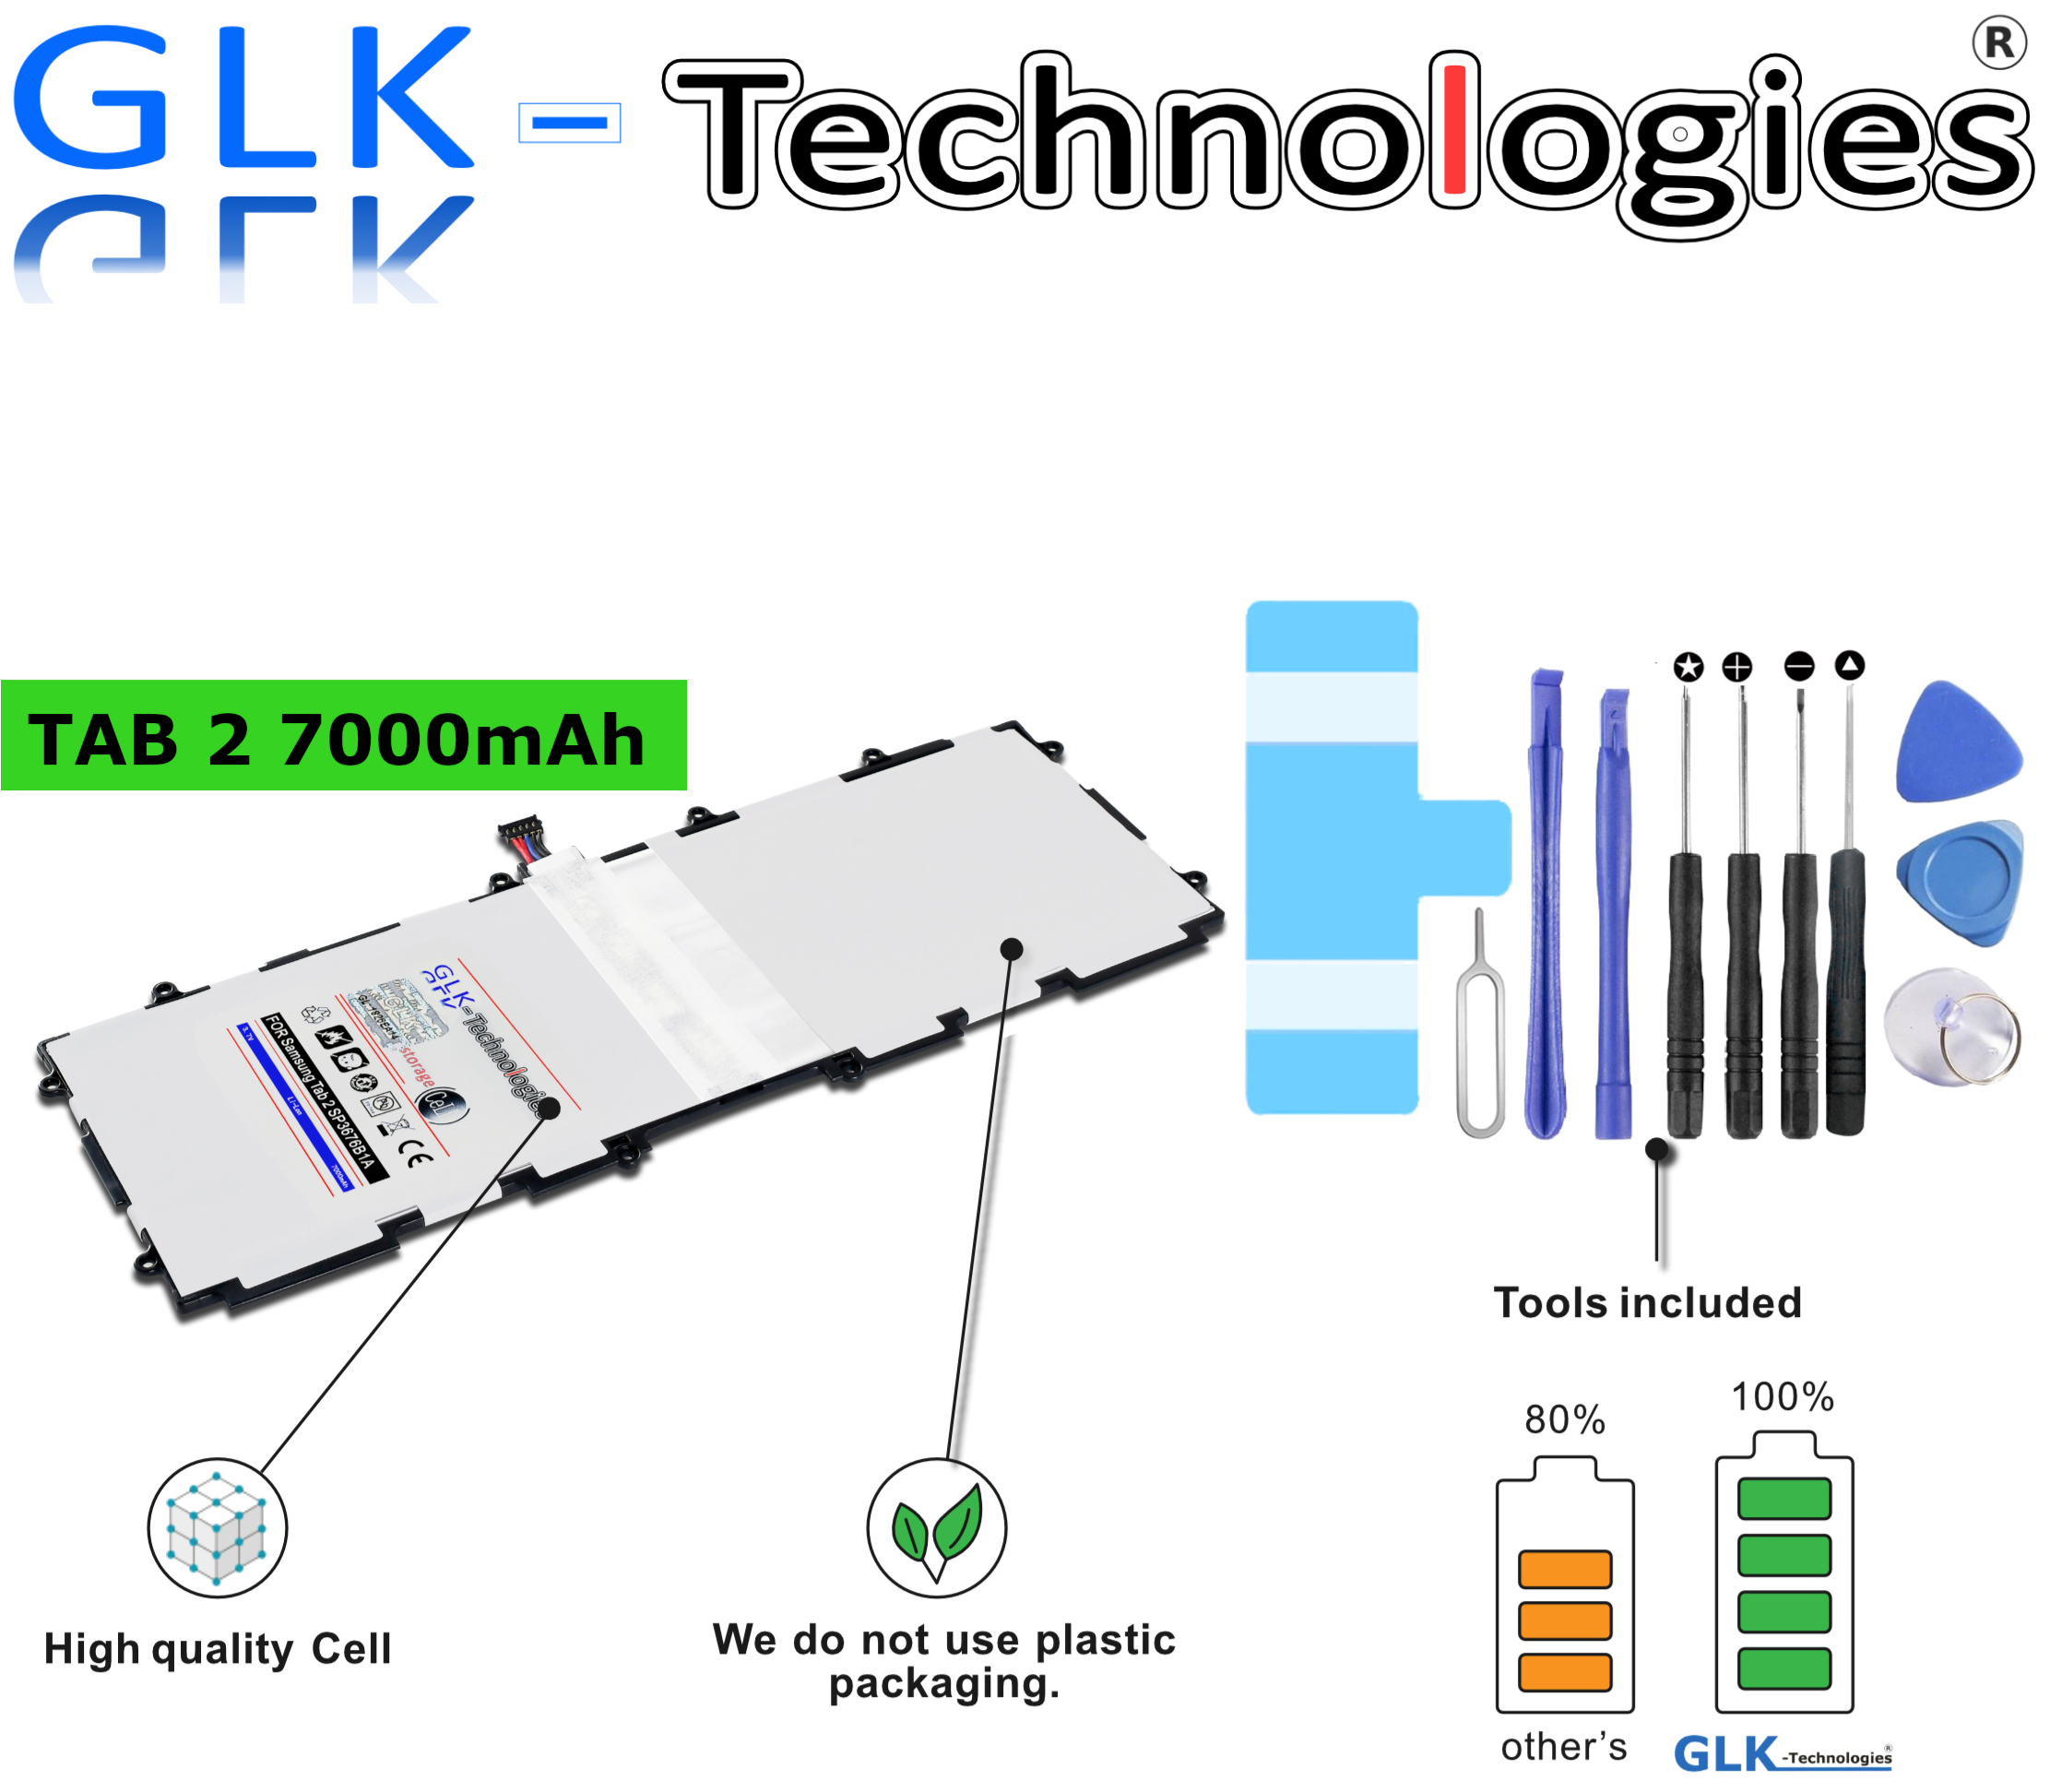 GLK-TECHNOLOGIES High Power Akku Tab Ersatz + Akku 7000mAh für GT-N8010 Werkzeug Li-Ion Galaxy GT-N8000 Tablet Akku Samsung 2 Tool Galaxy